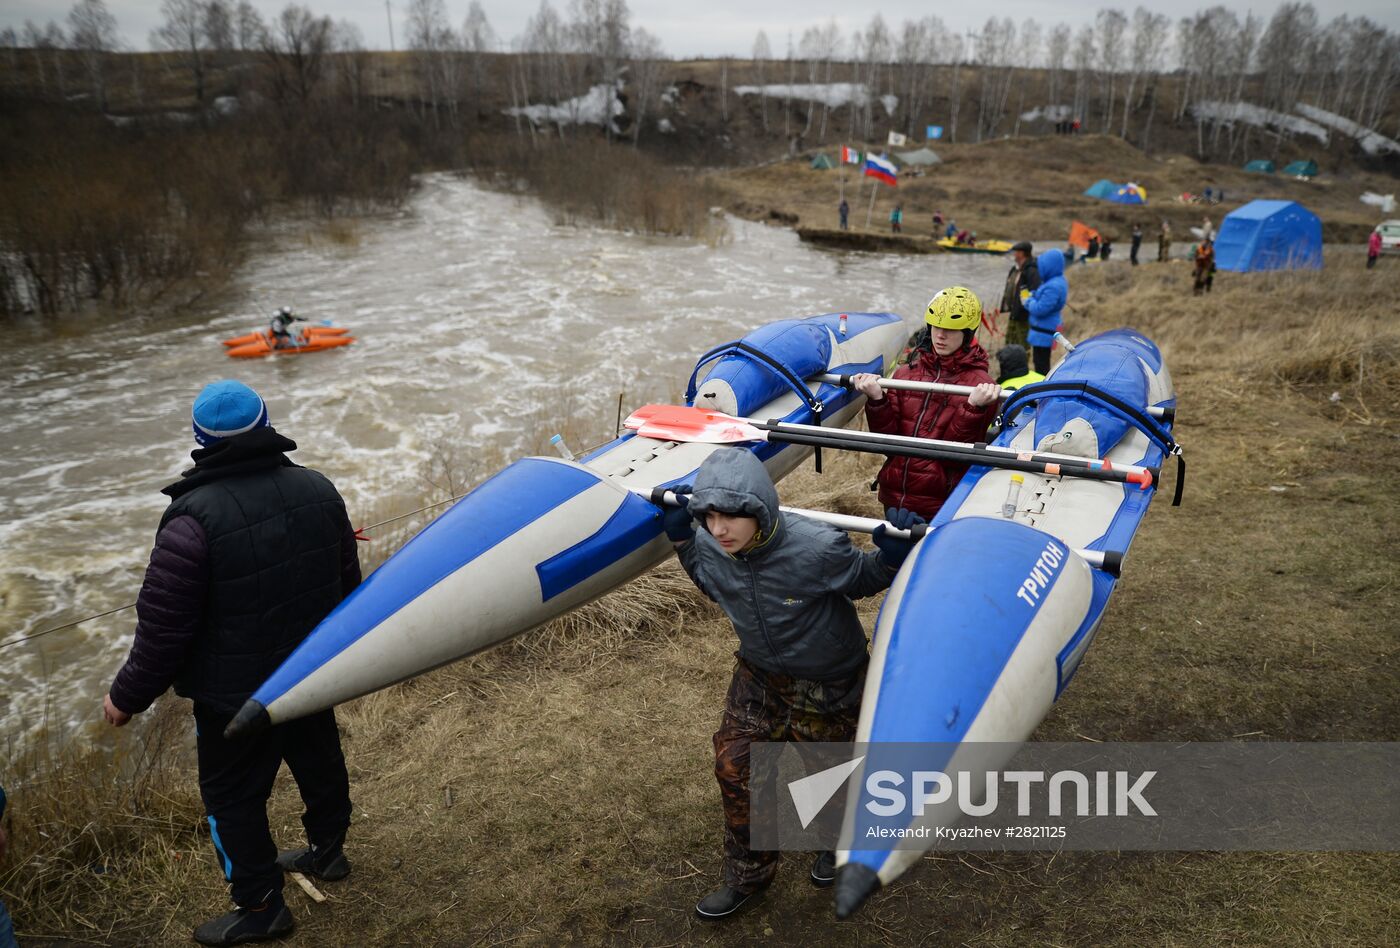 Novosibirsk Region's sport tourism championships in whitewater sports